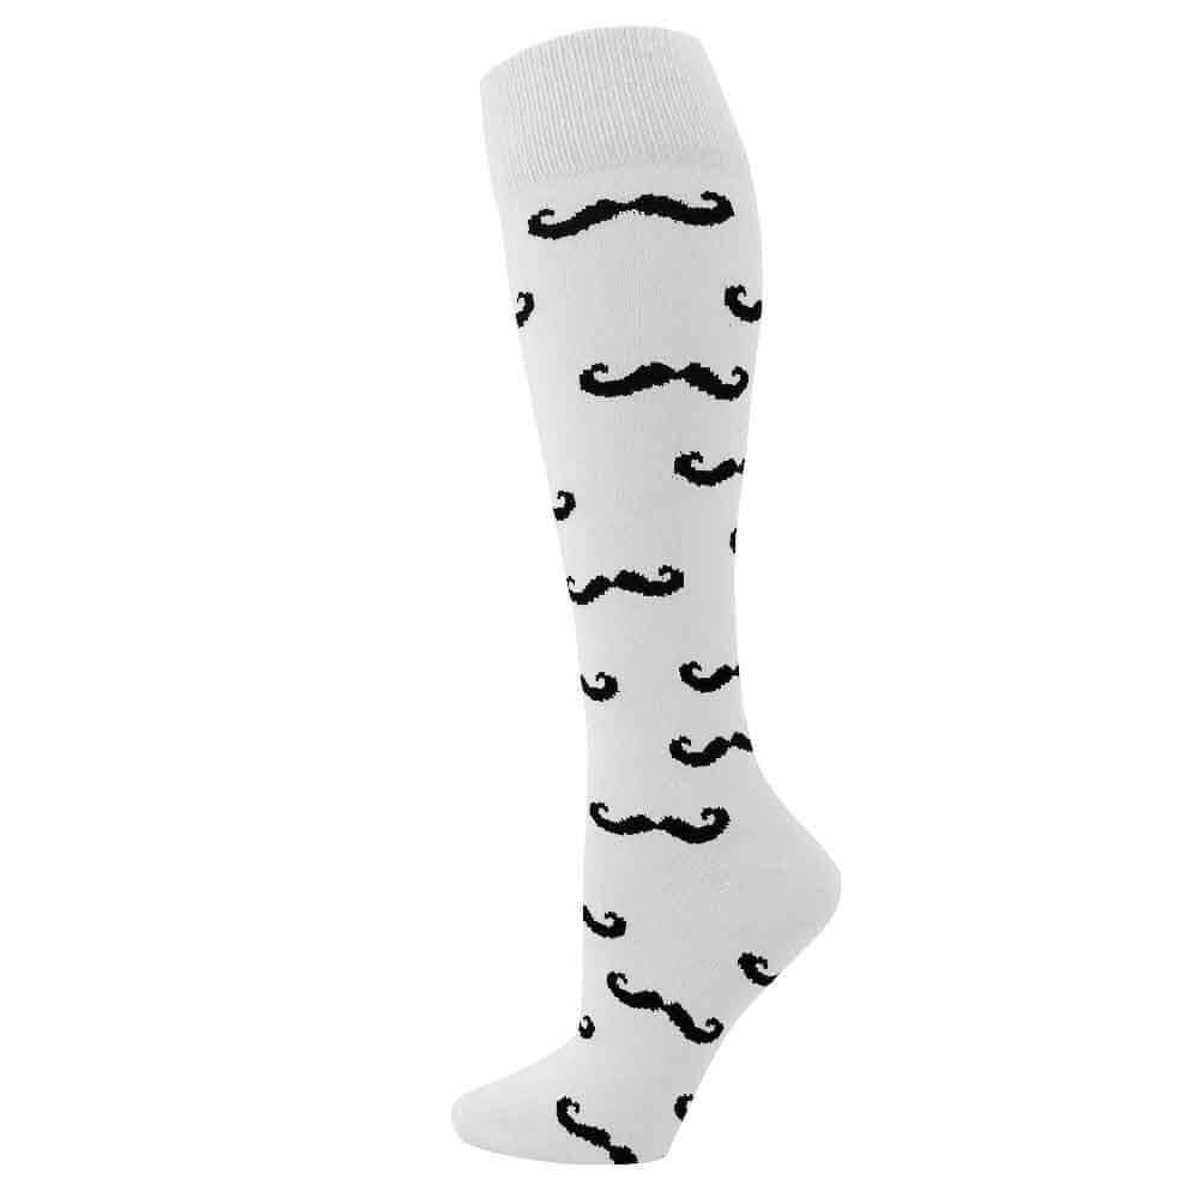 Mustache Knee High Sports Socks - White Black - Medium